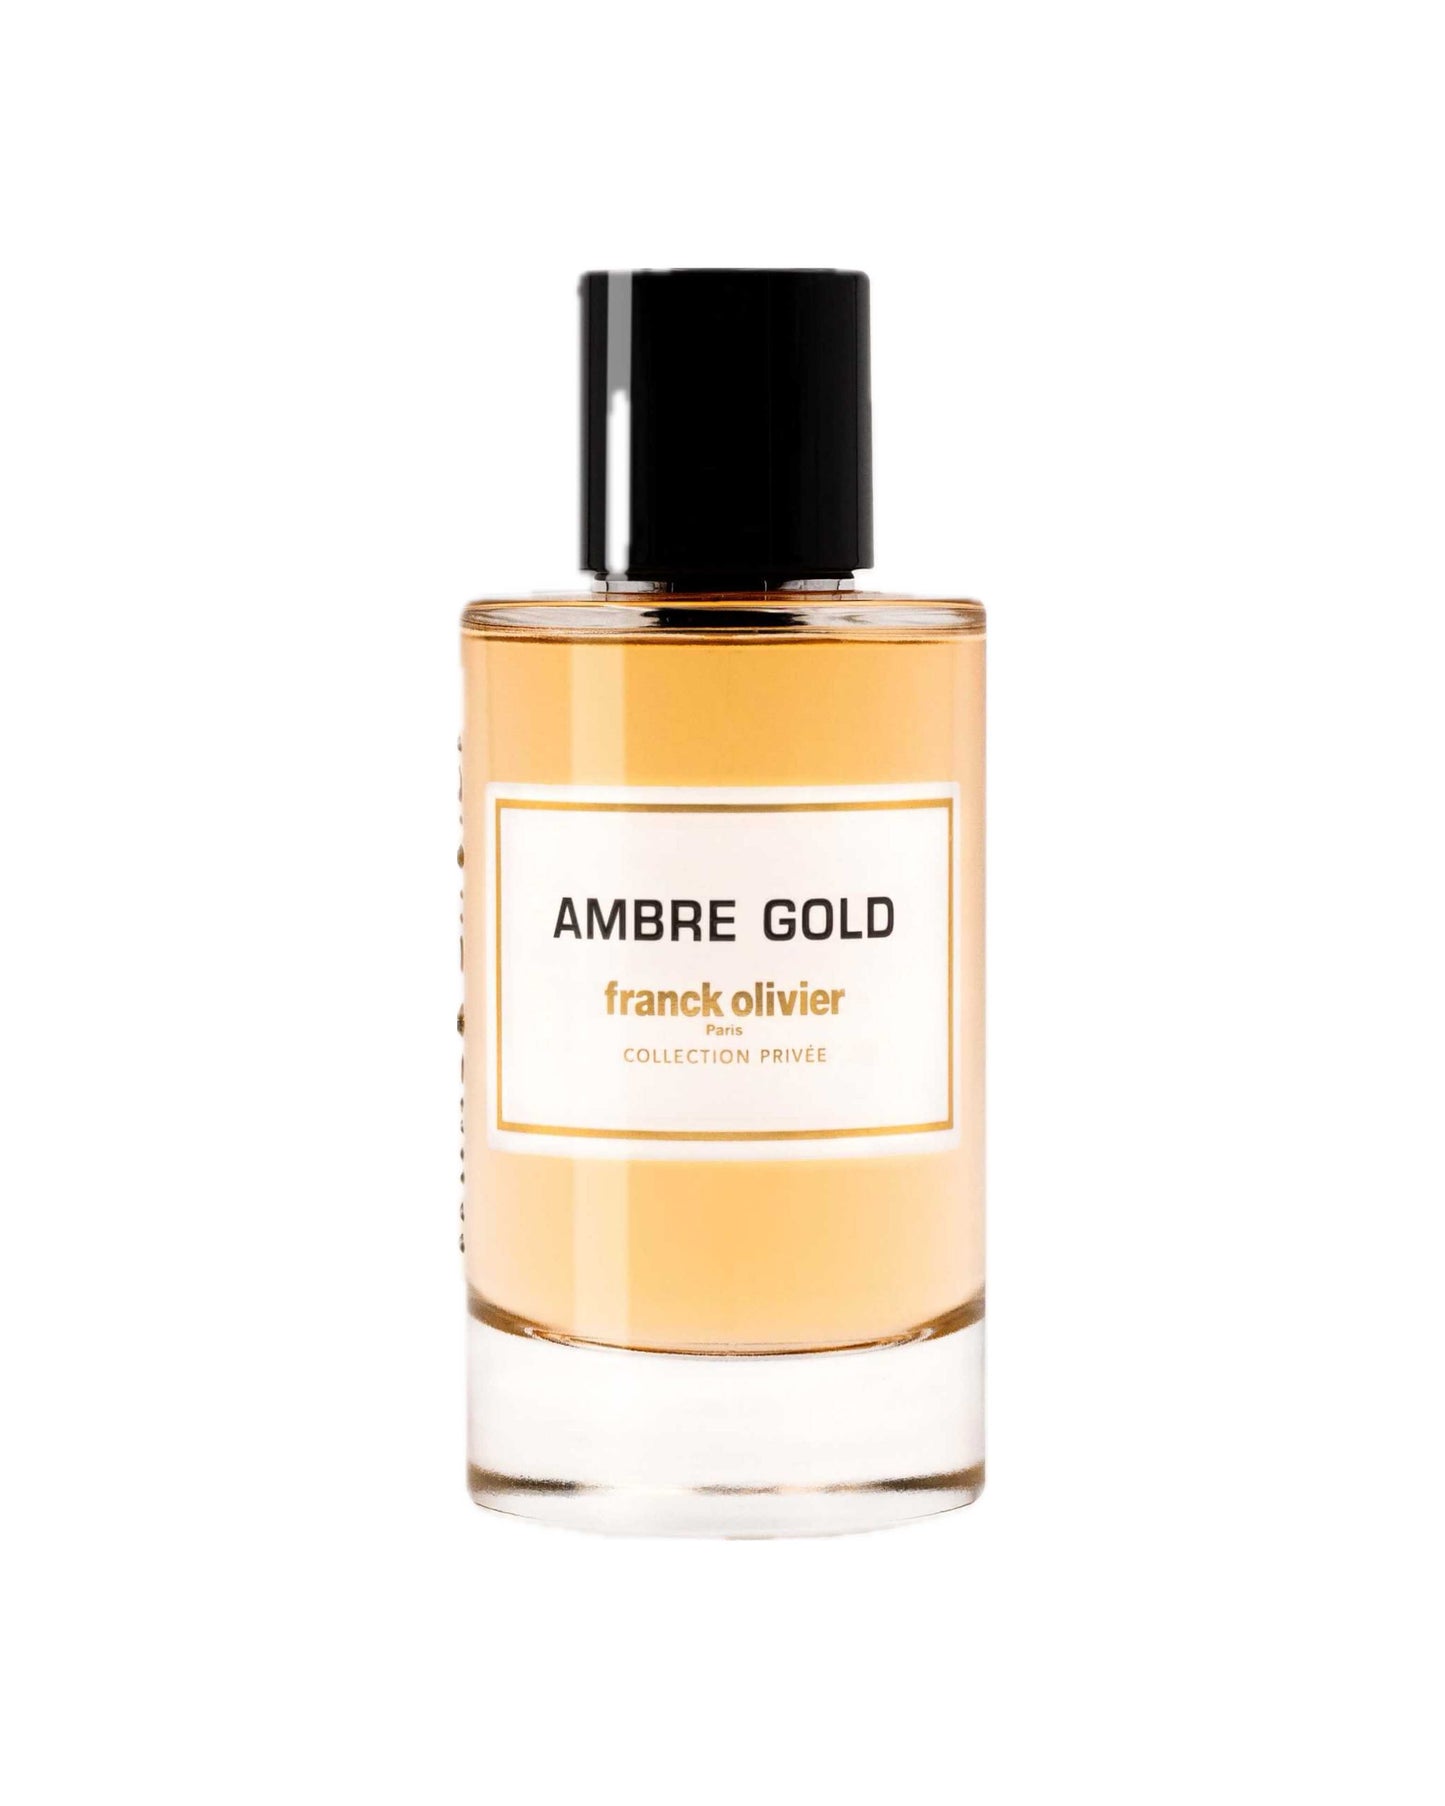 Franck Olivier – AMBRE GOLD–foryou–prix de foryou parfumurie en ligne–vente de parfum original au Maroc–prix de foryou parfum